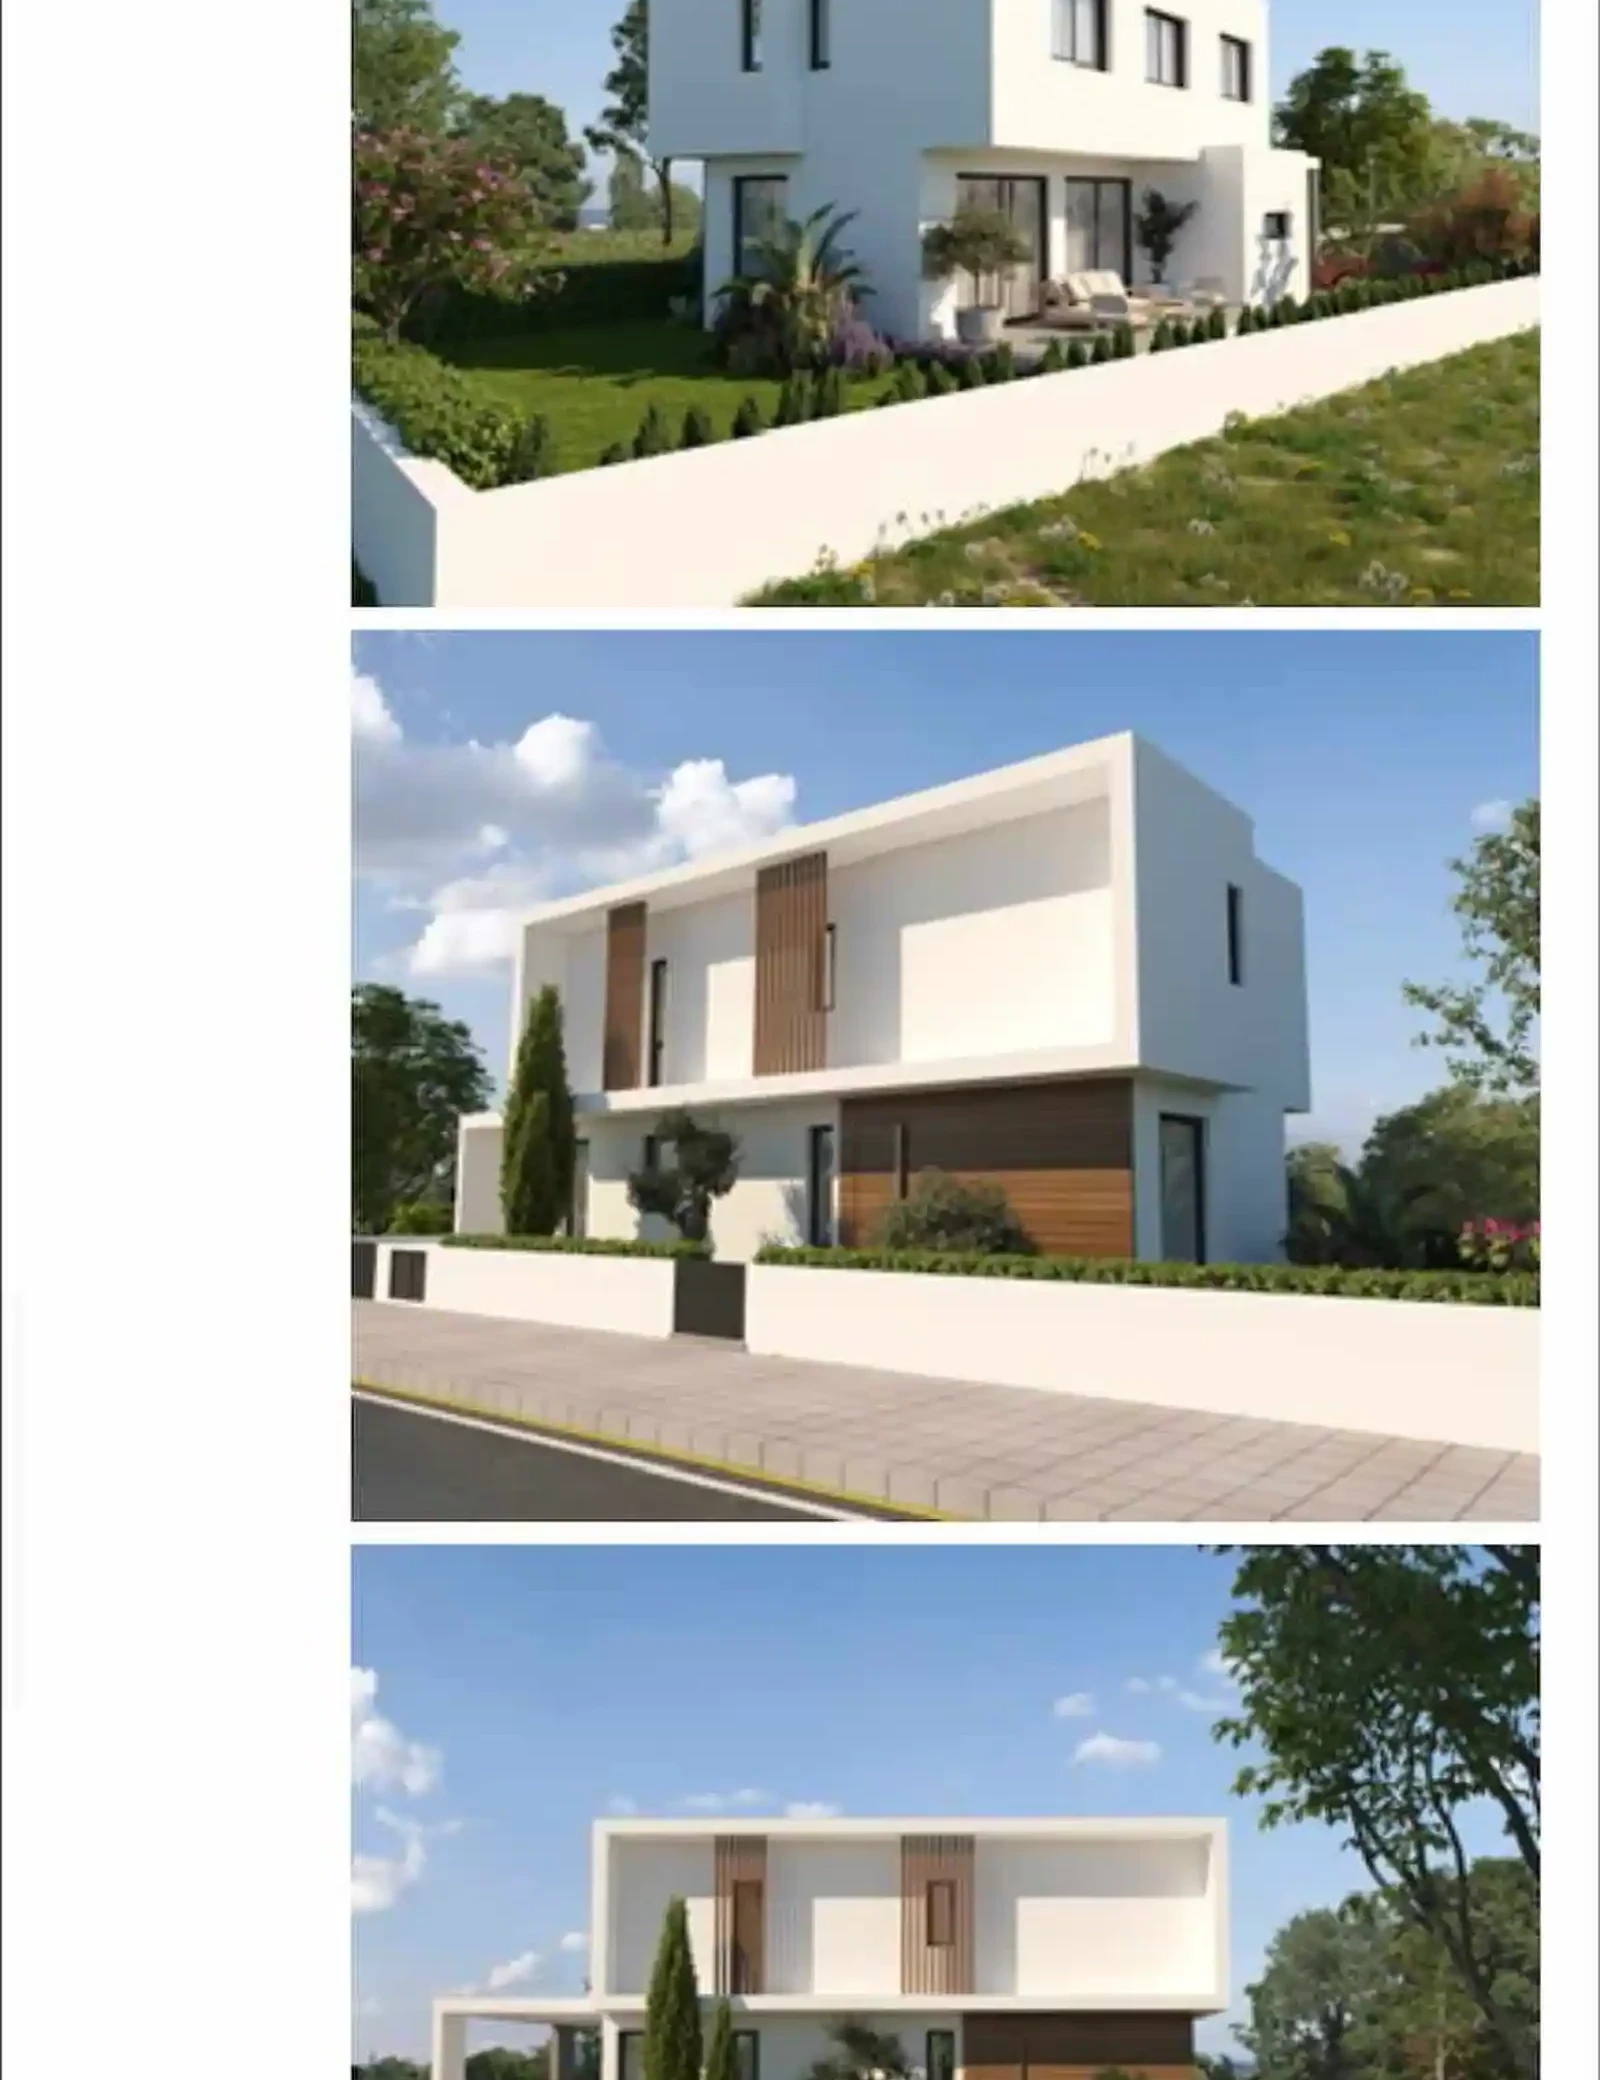 3-bedroom villa fоr sаle €345.000, image 1